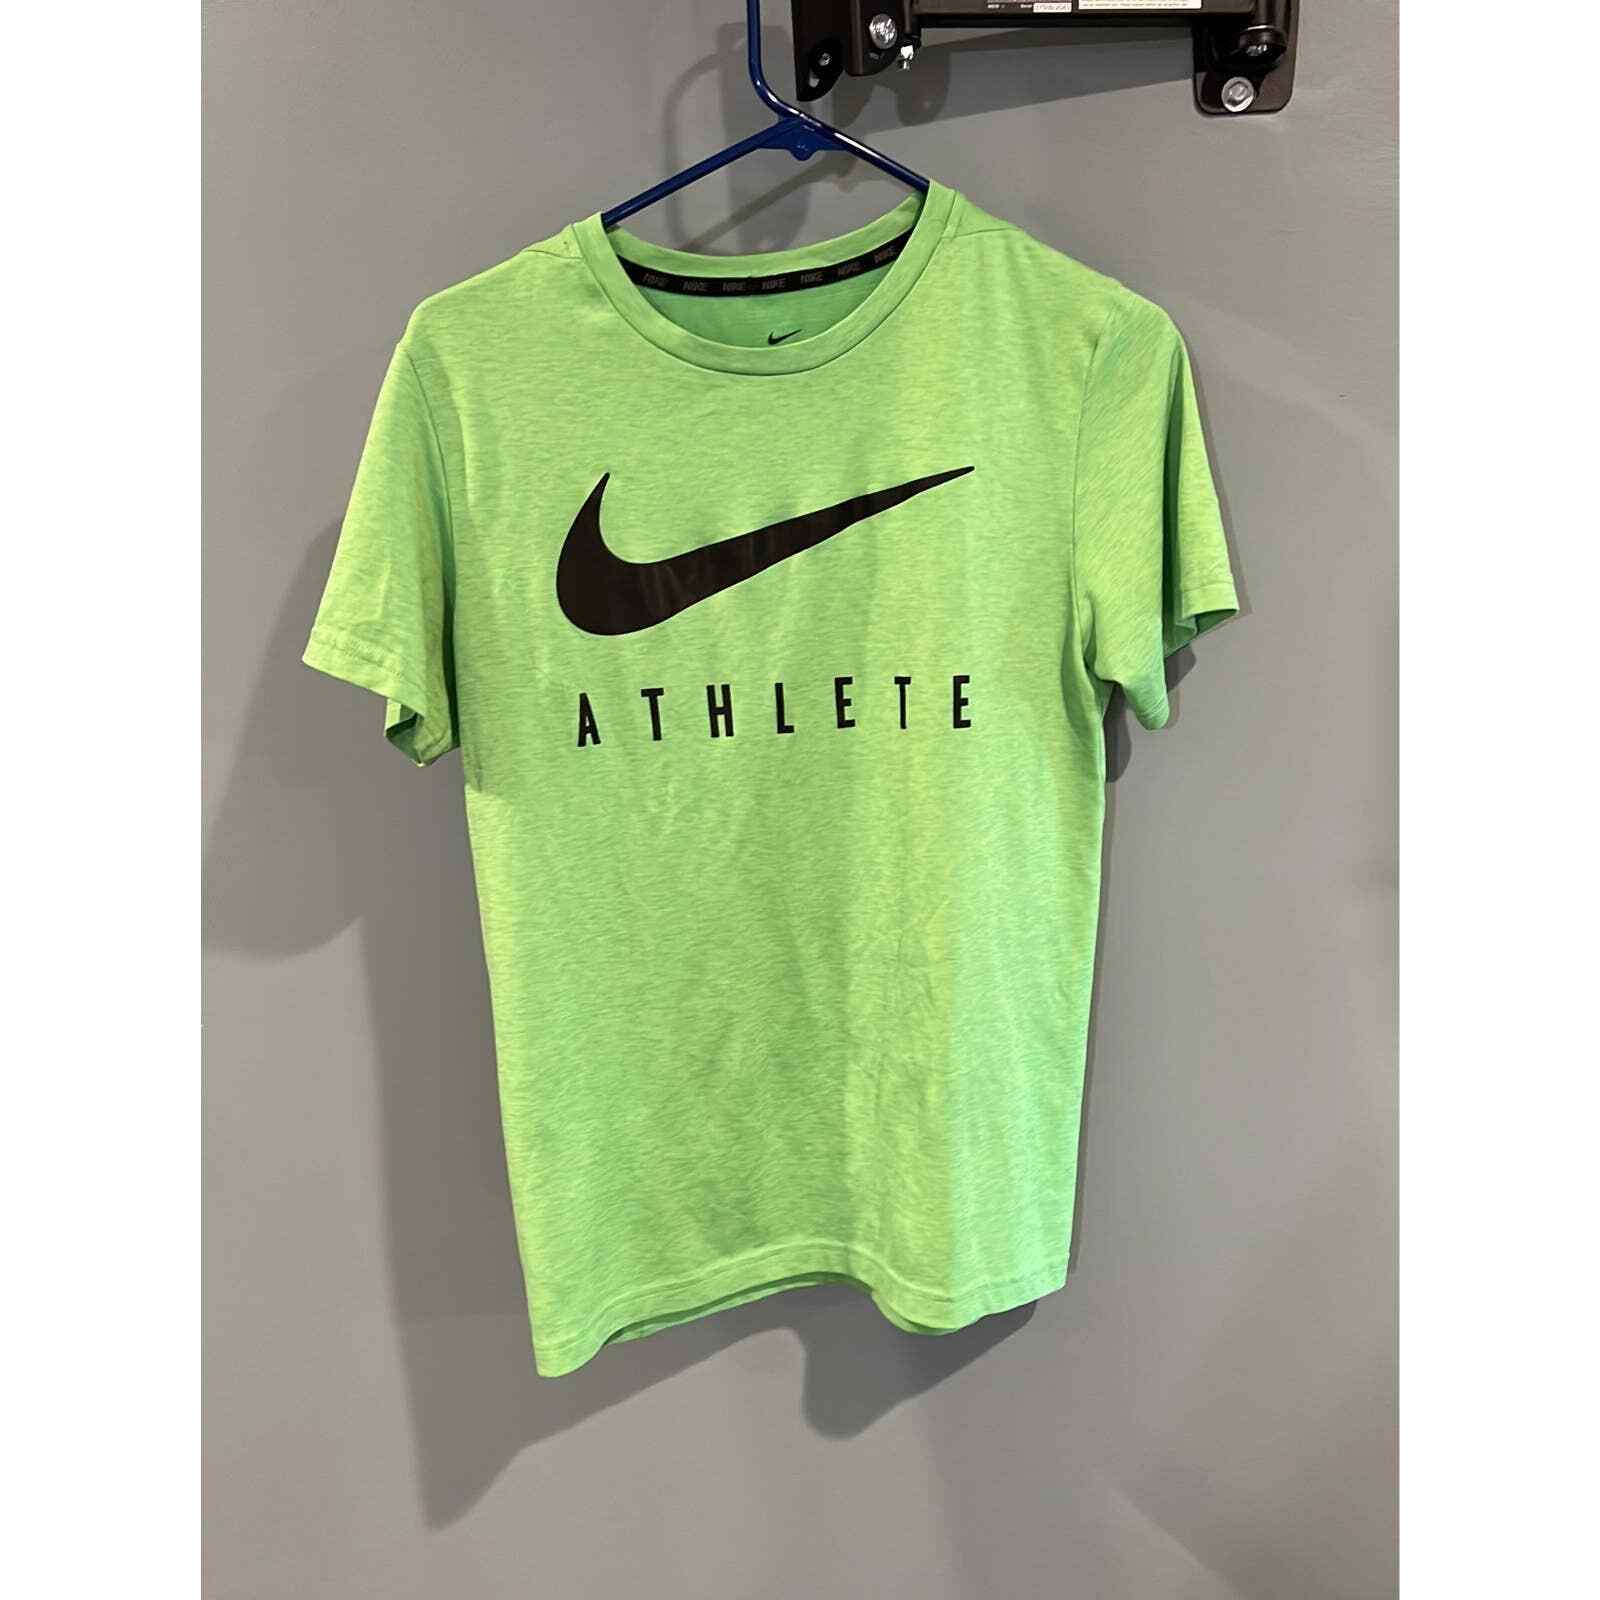 Ladder hulp wit Nike Dri-FIT Nike athlete t-shirt - youth | eBay